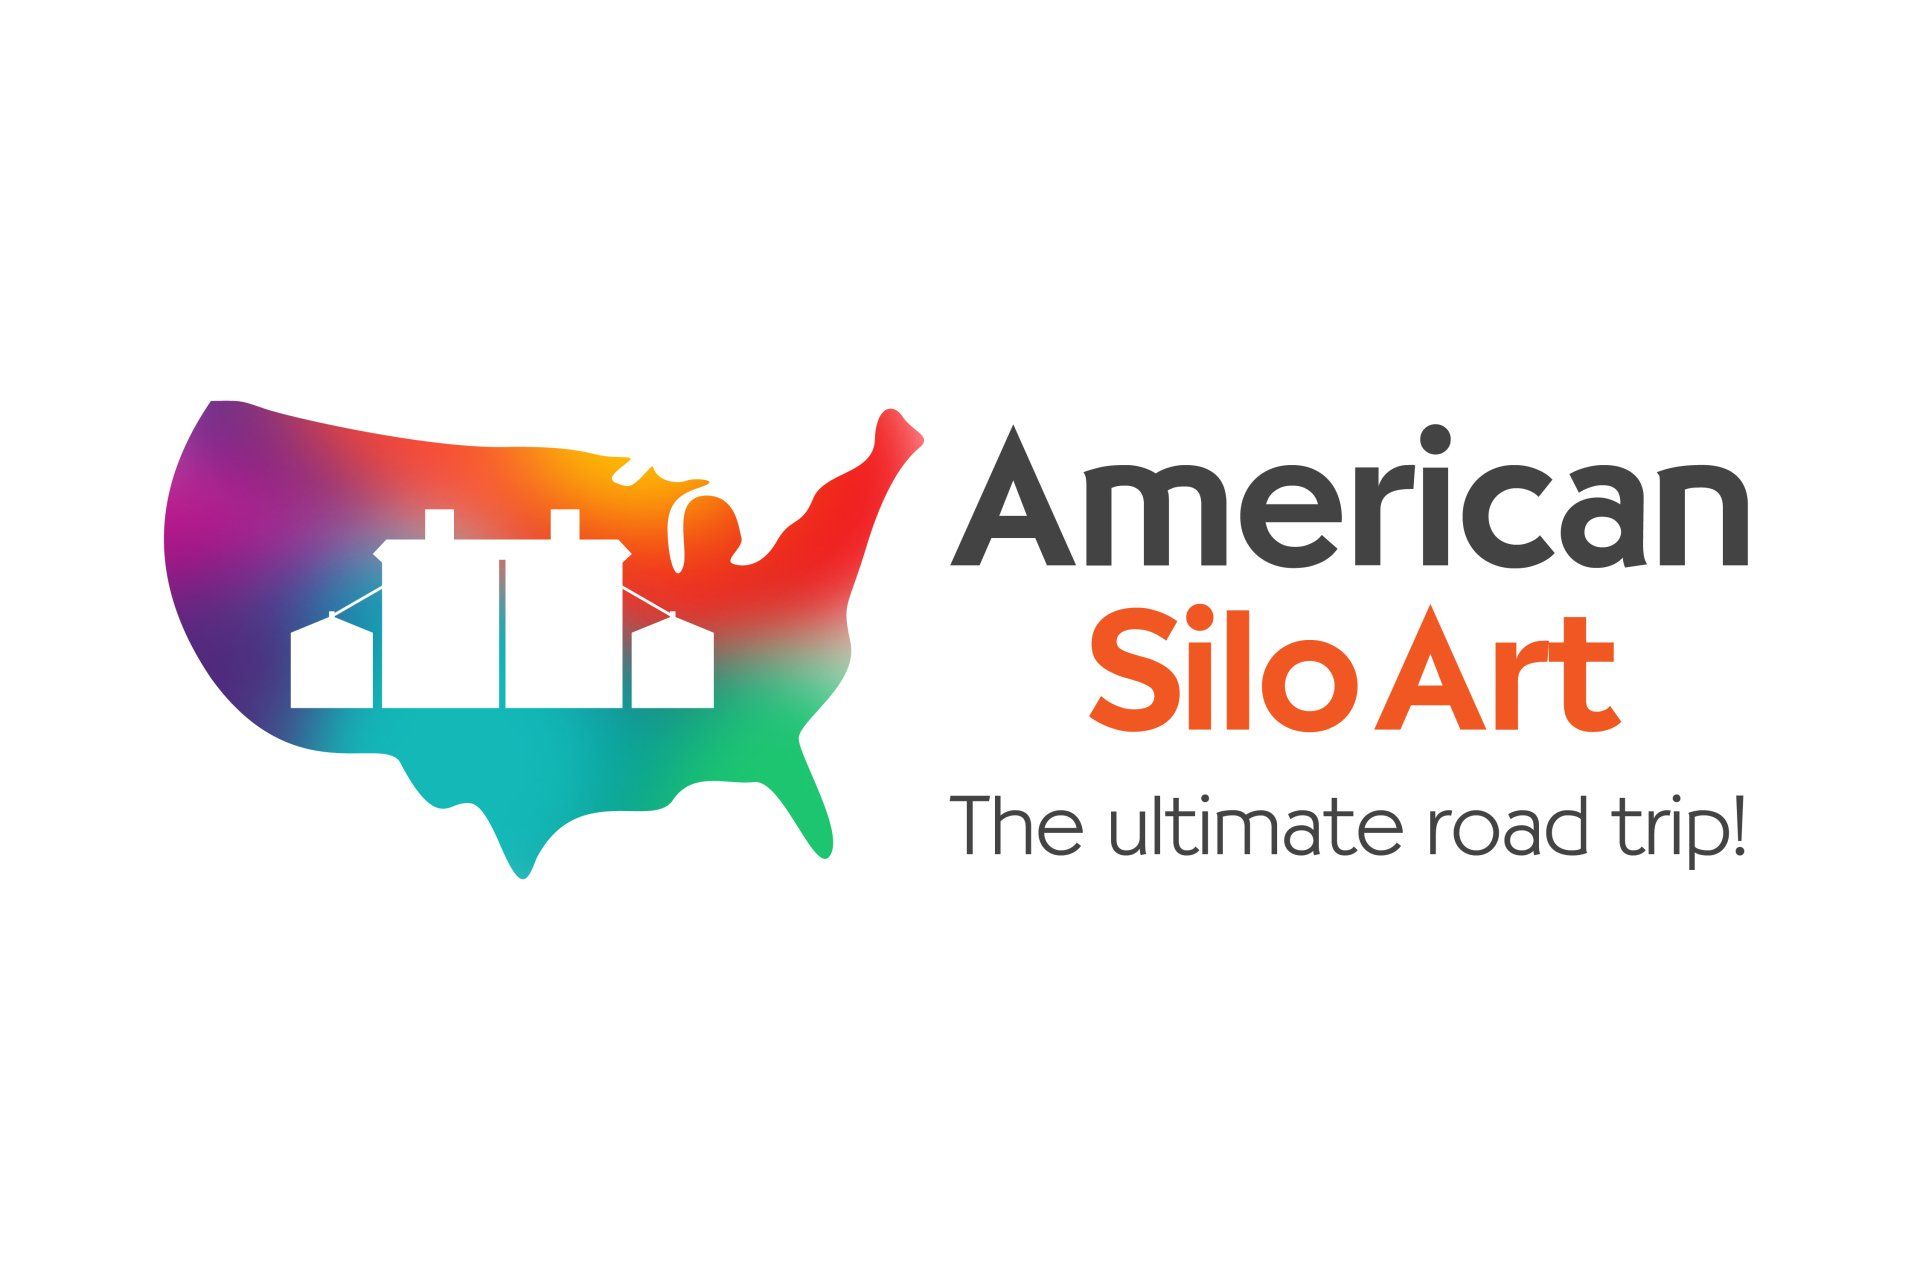 Australian Silo Art Trail logo